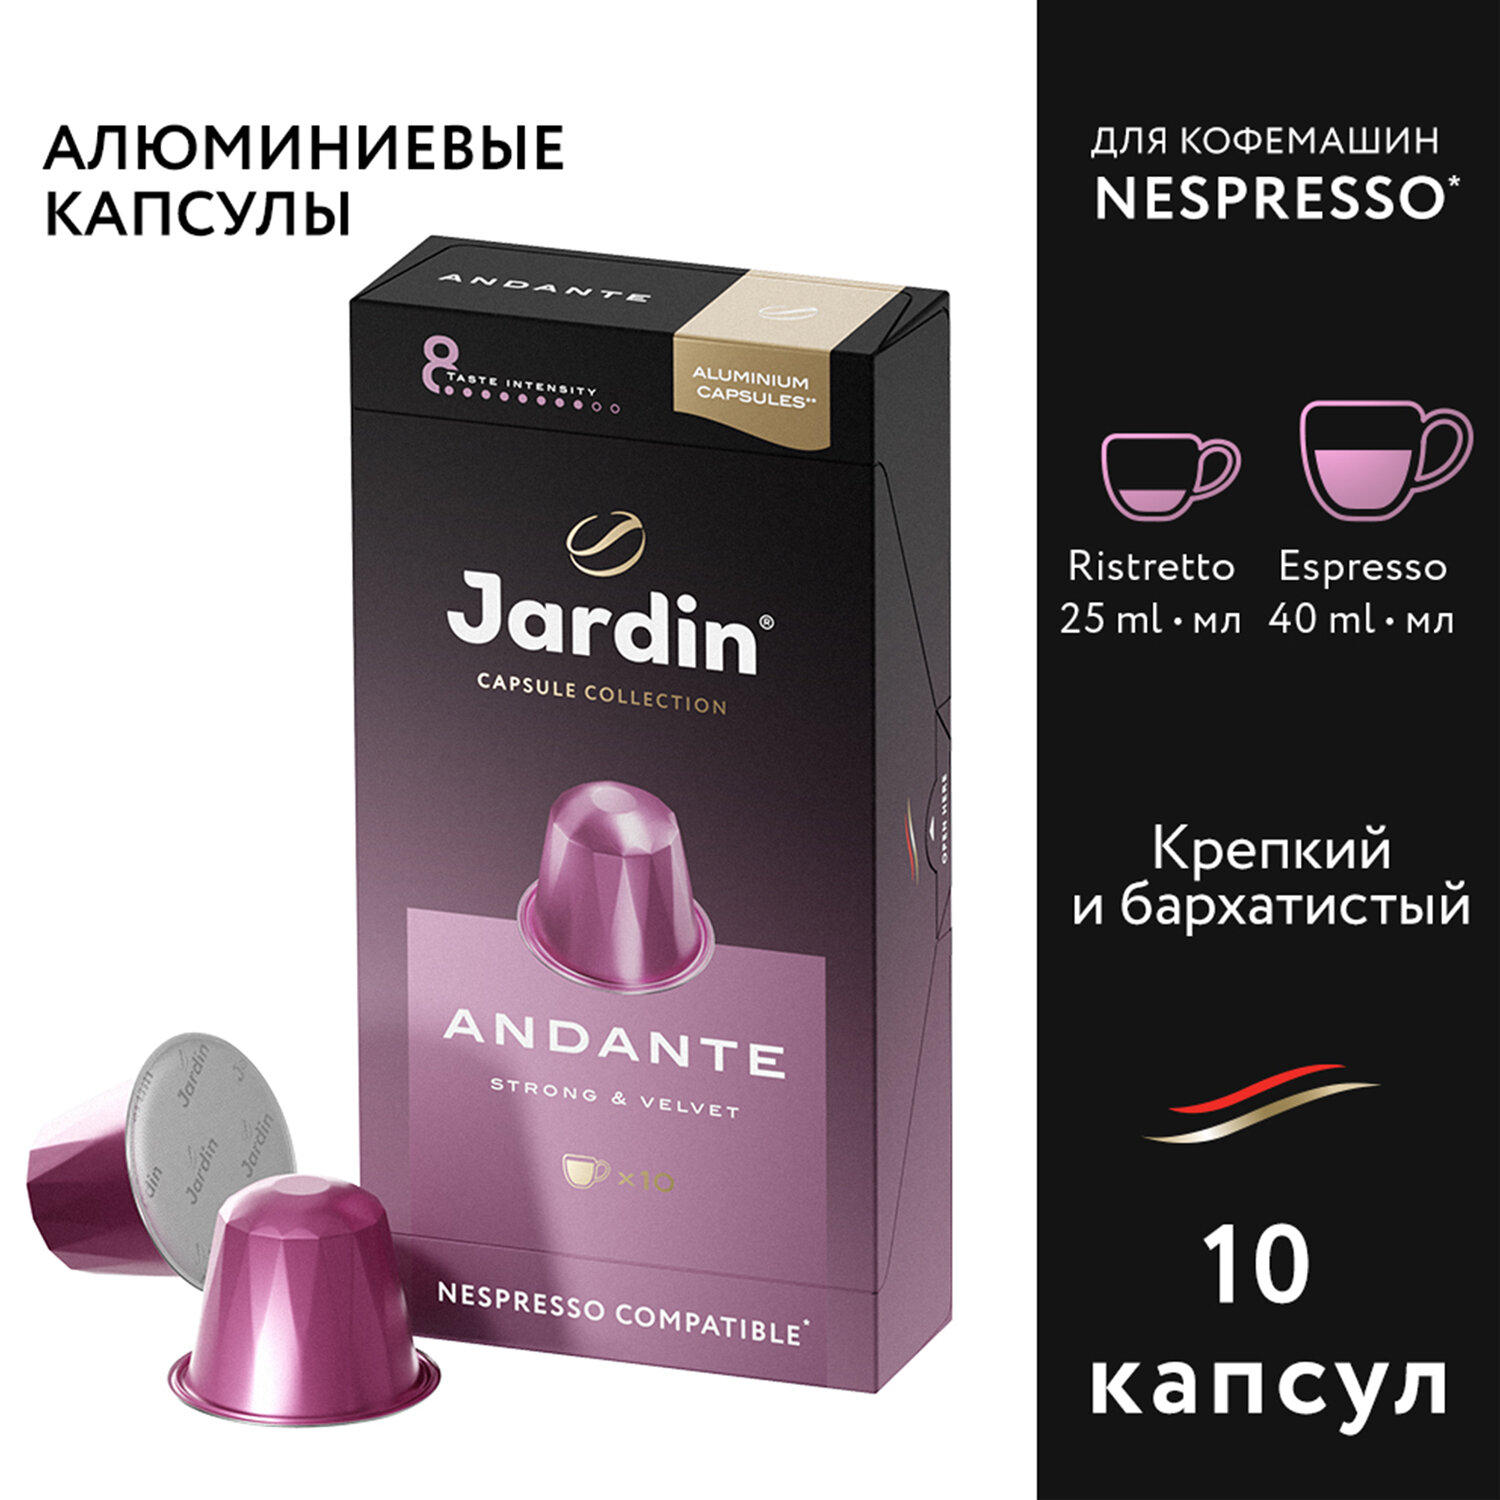 Кофе JARDIN 1353-10, комплект 2 шт.